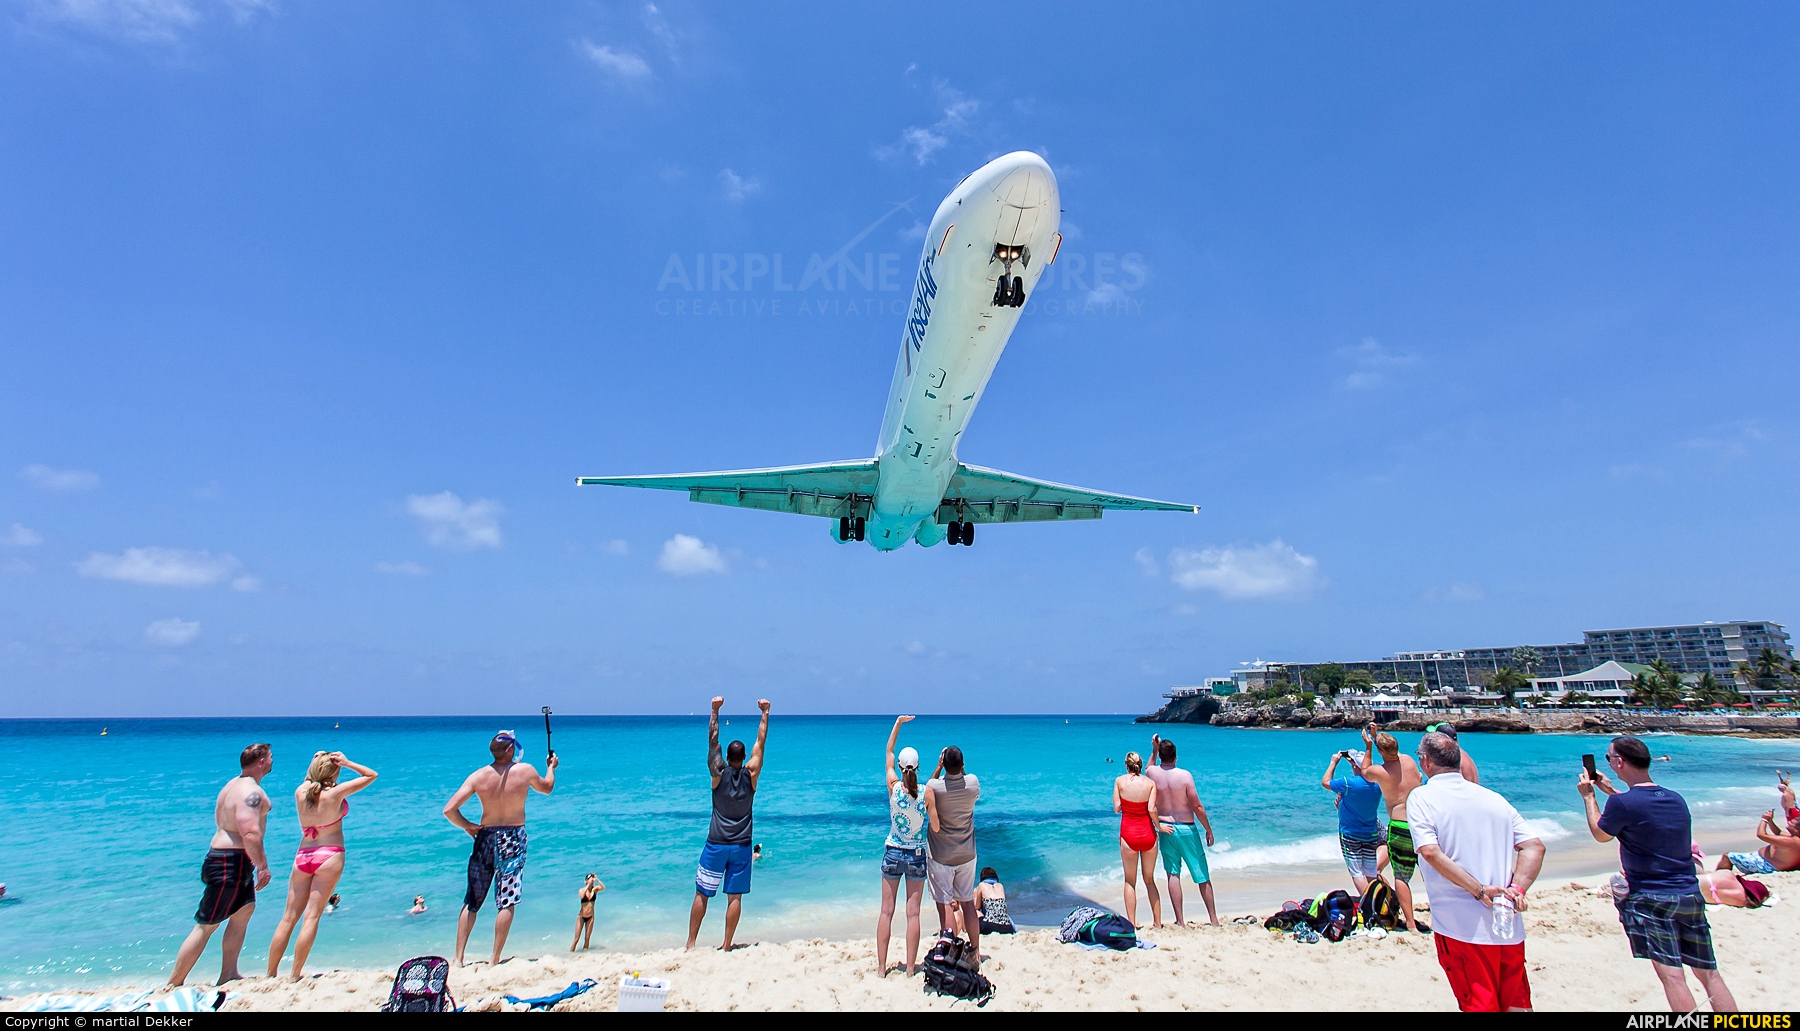 Insel Air P4-MDH aircraft at Sint Maarten - Princess Juliana Intl